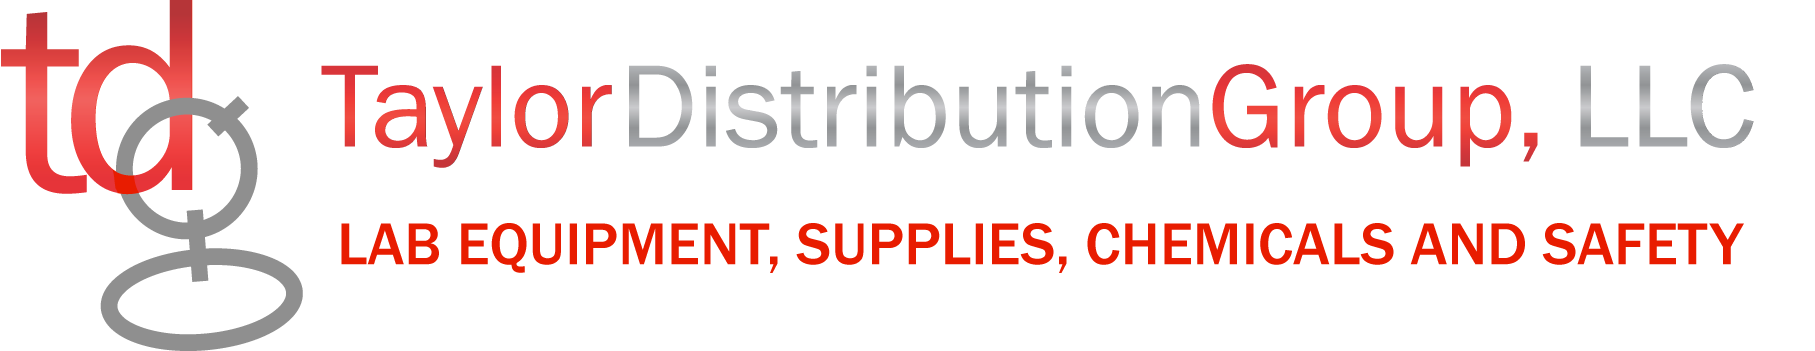 Taylor Distribution Group logo with tagline 